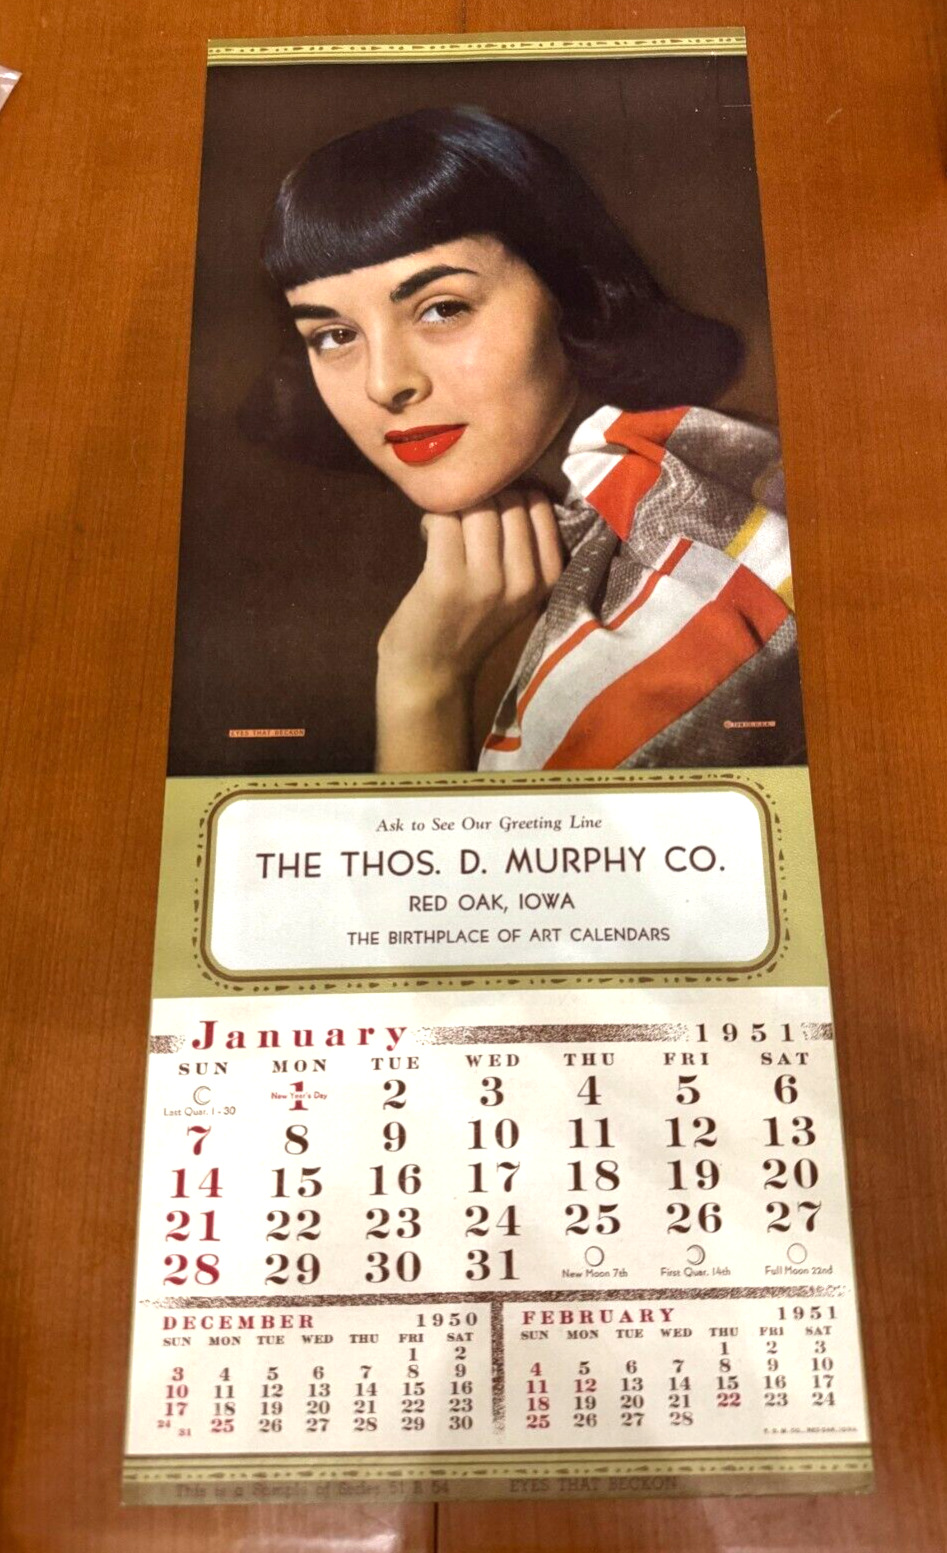 Original January 1951 Pinup Girl Calendar Salesman's Sample - Eyes That Beckon